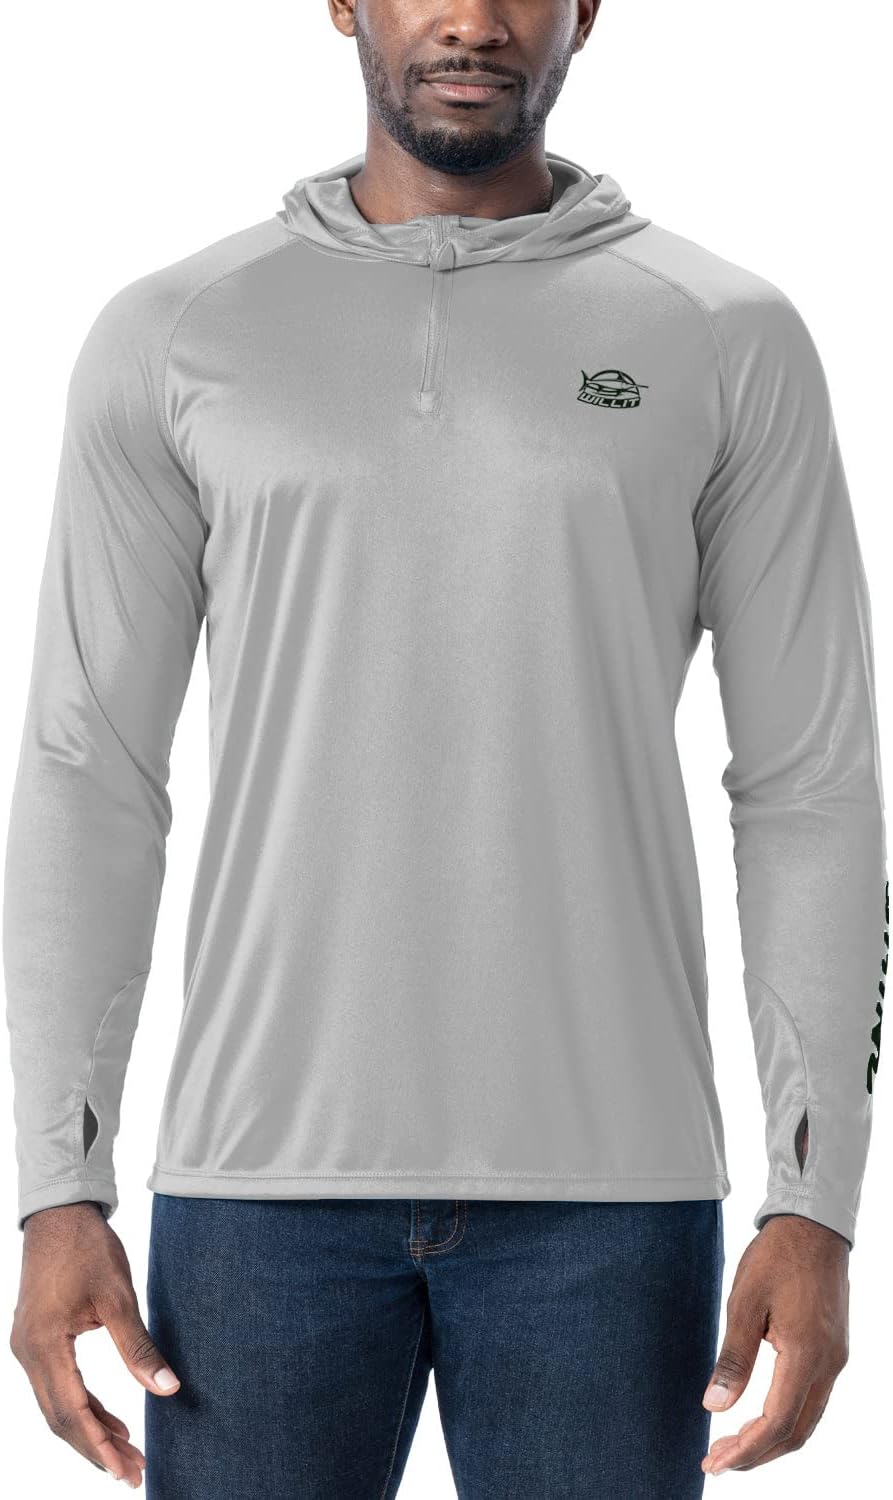 Willit Mens UPF 50+ Sun Protection Hoodie Shirt Long Sleeve Rash Guard Fishing SPF Outdoor UV Shirt Lightweight